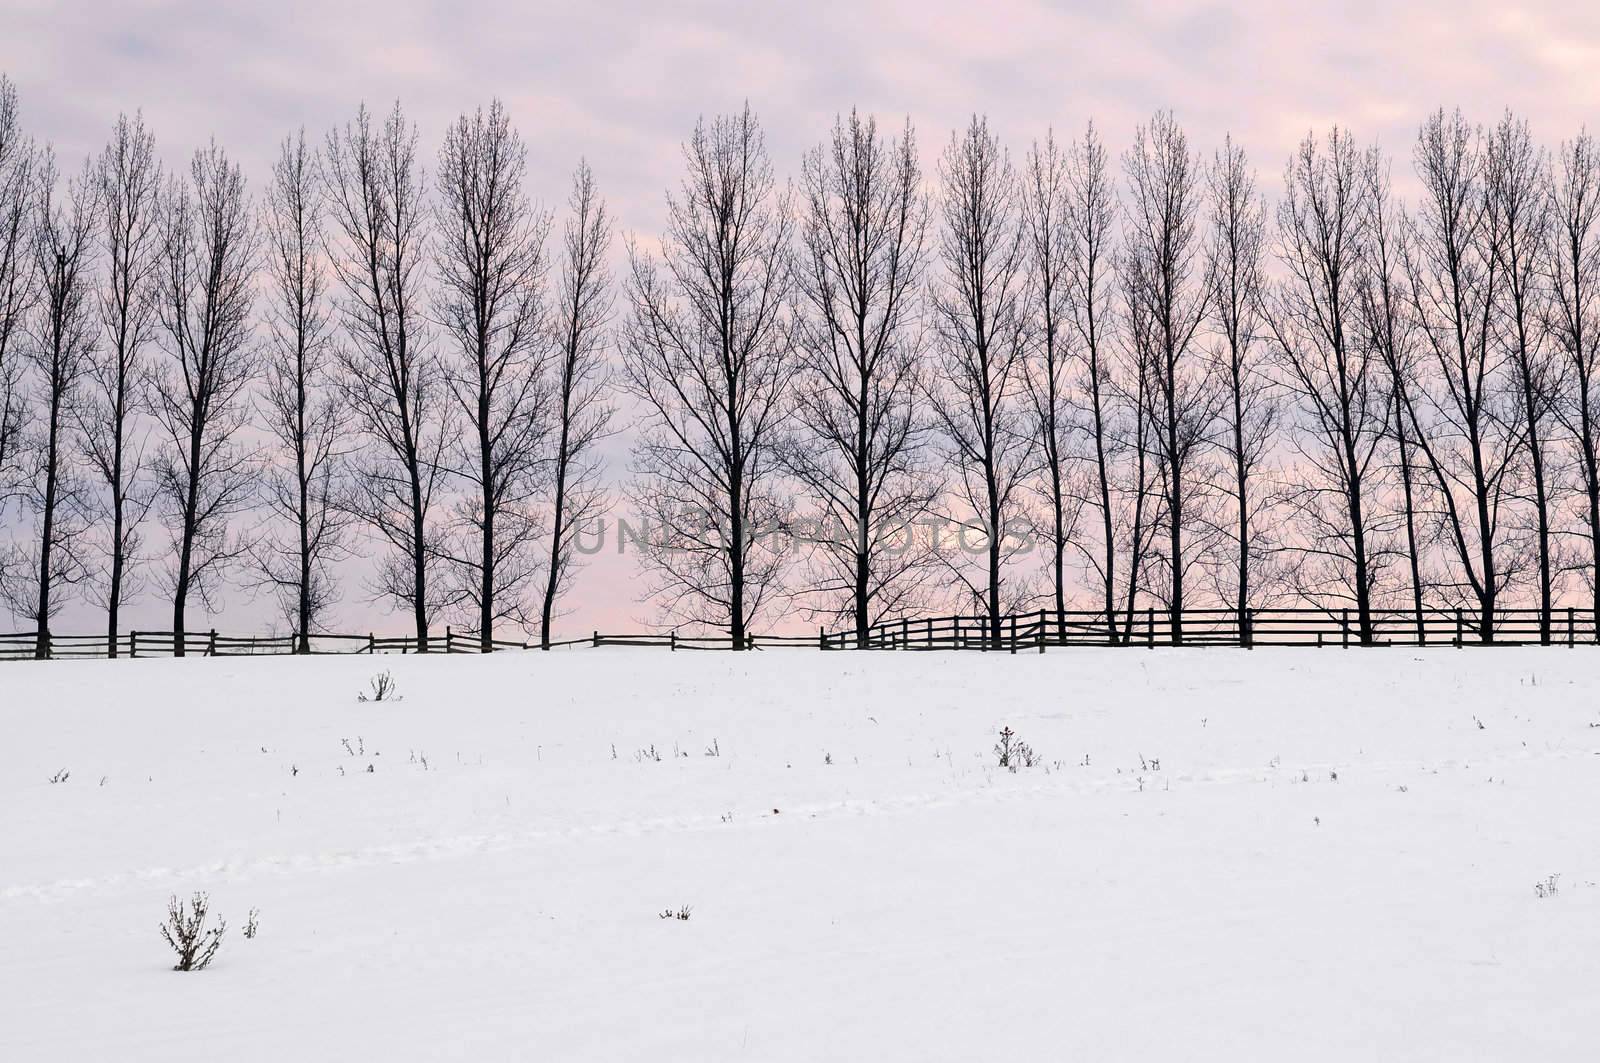 Rural winter landscape by elenathewise